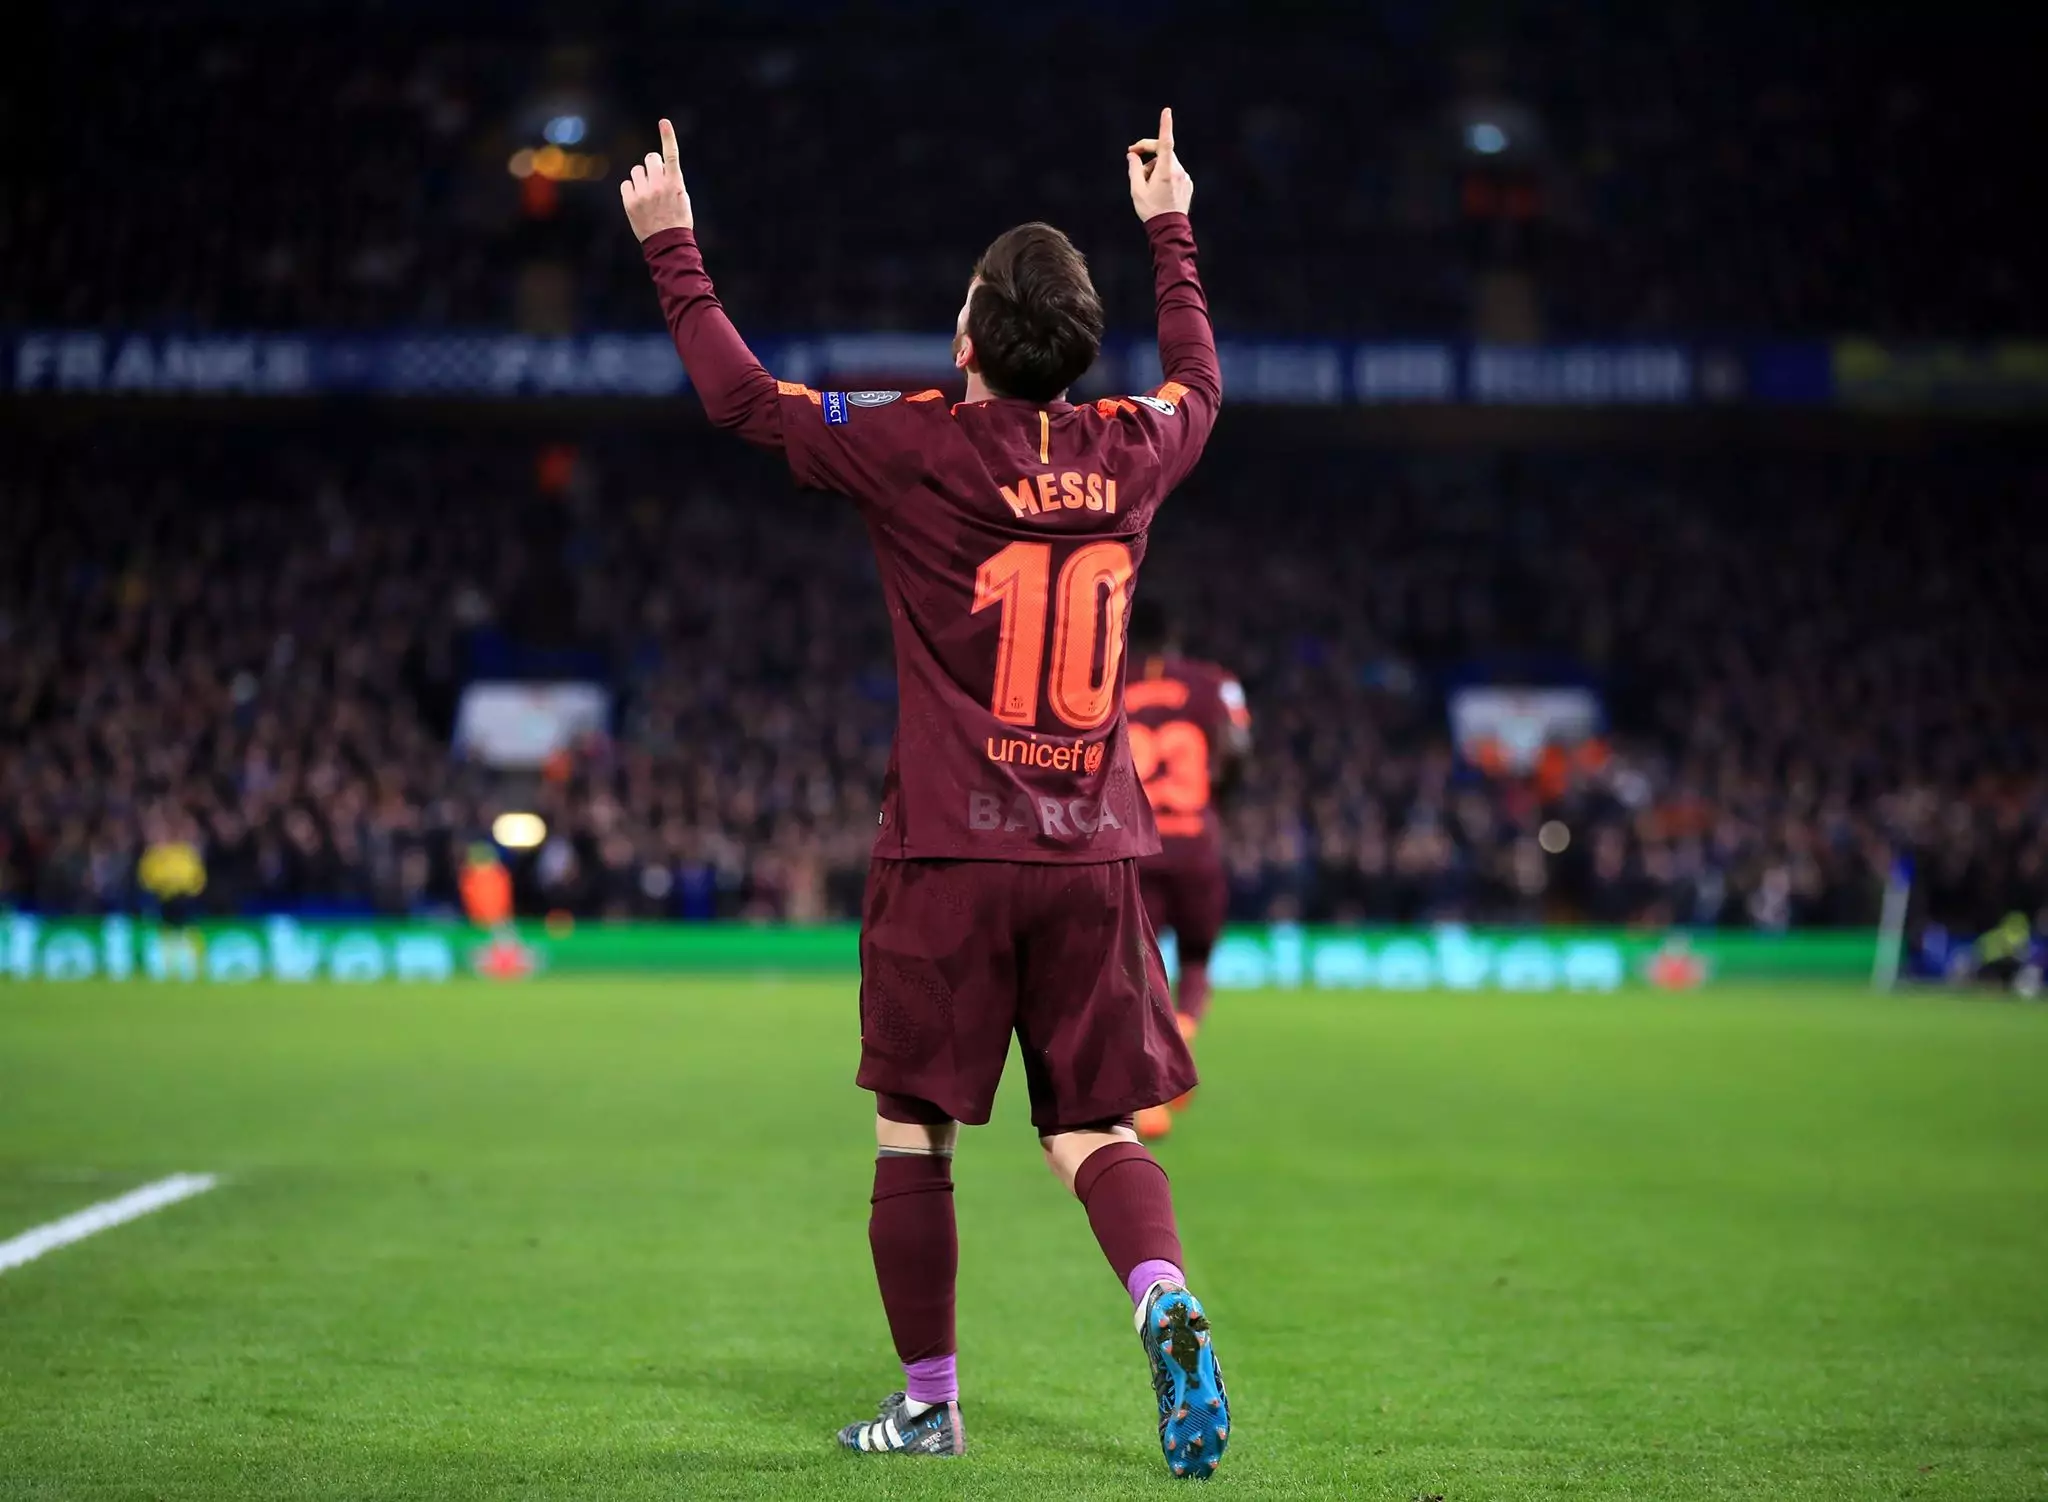 Messi celebrates scoring against Chelsea. Image: PA